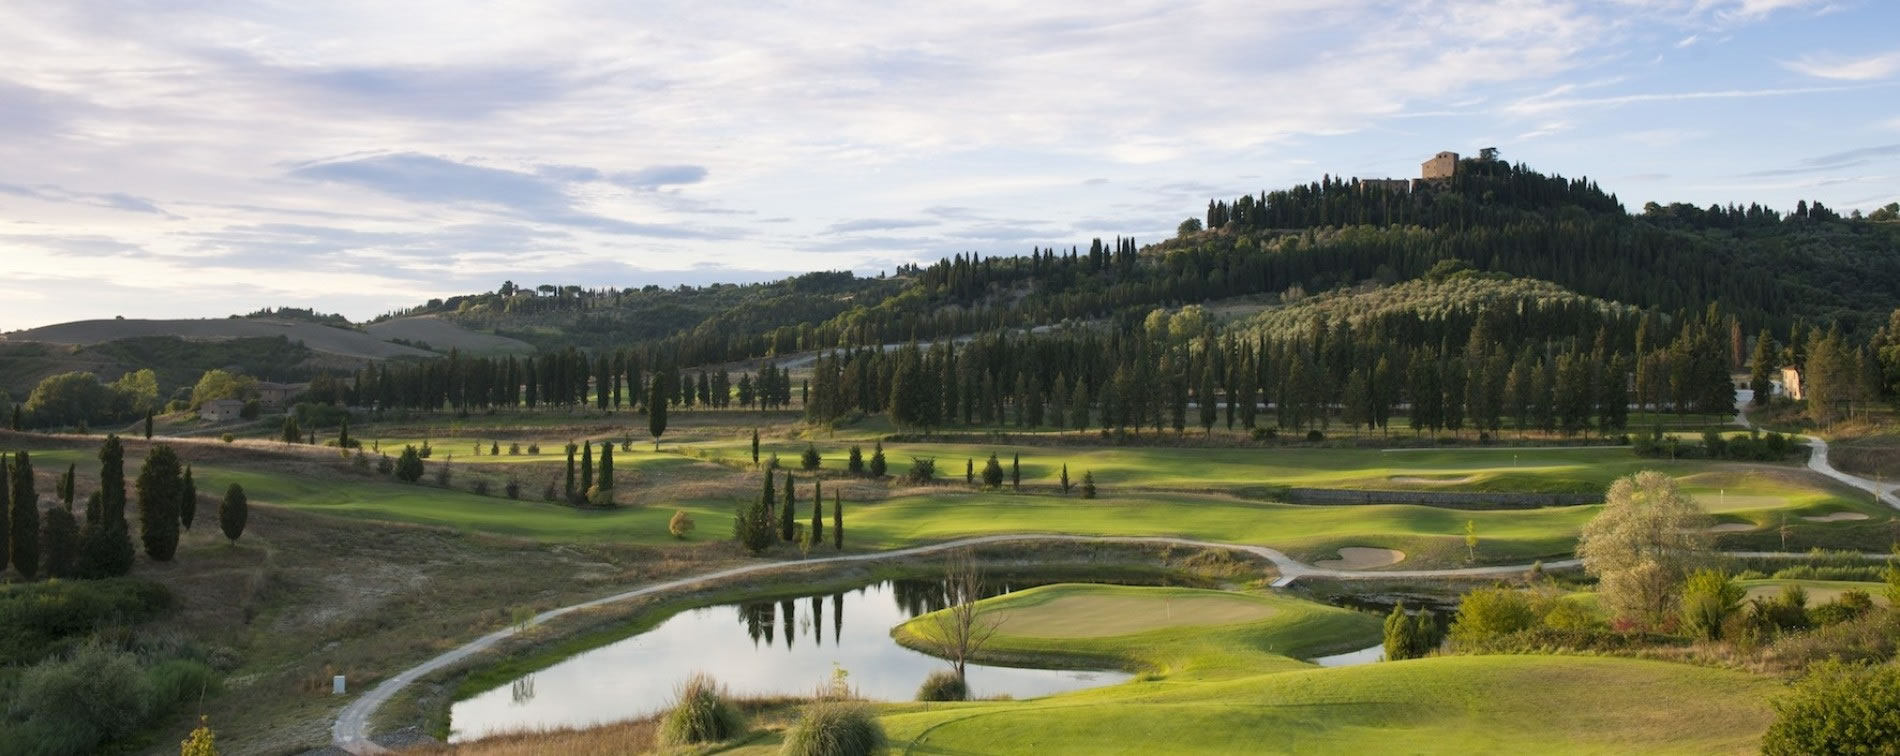 Golf Resort Tuscany